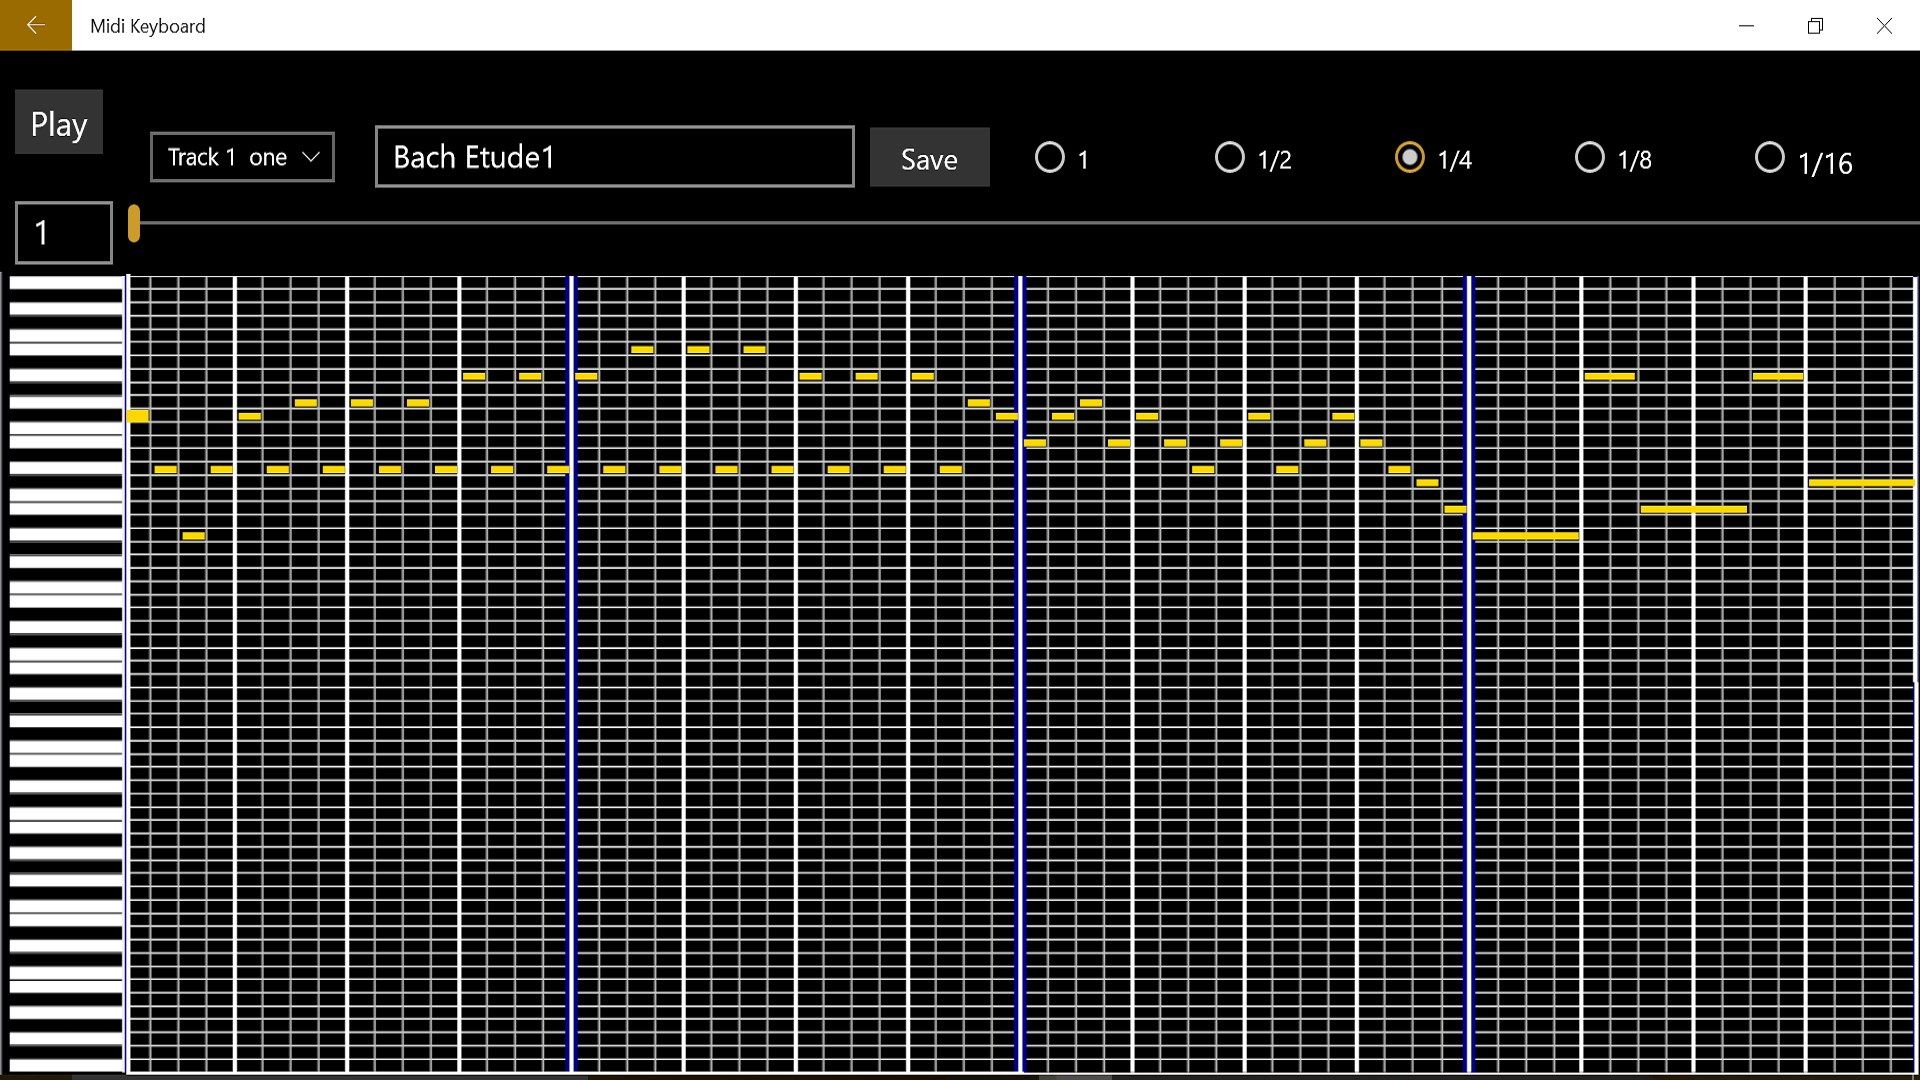 MIDI Editor